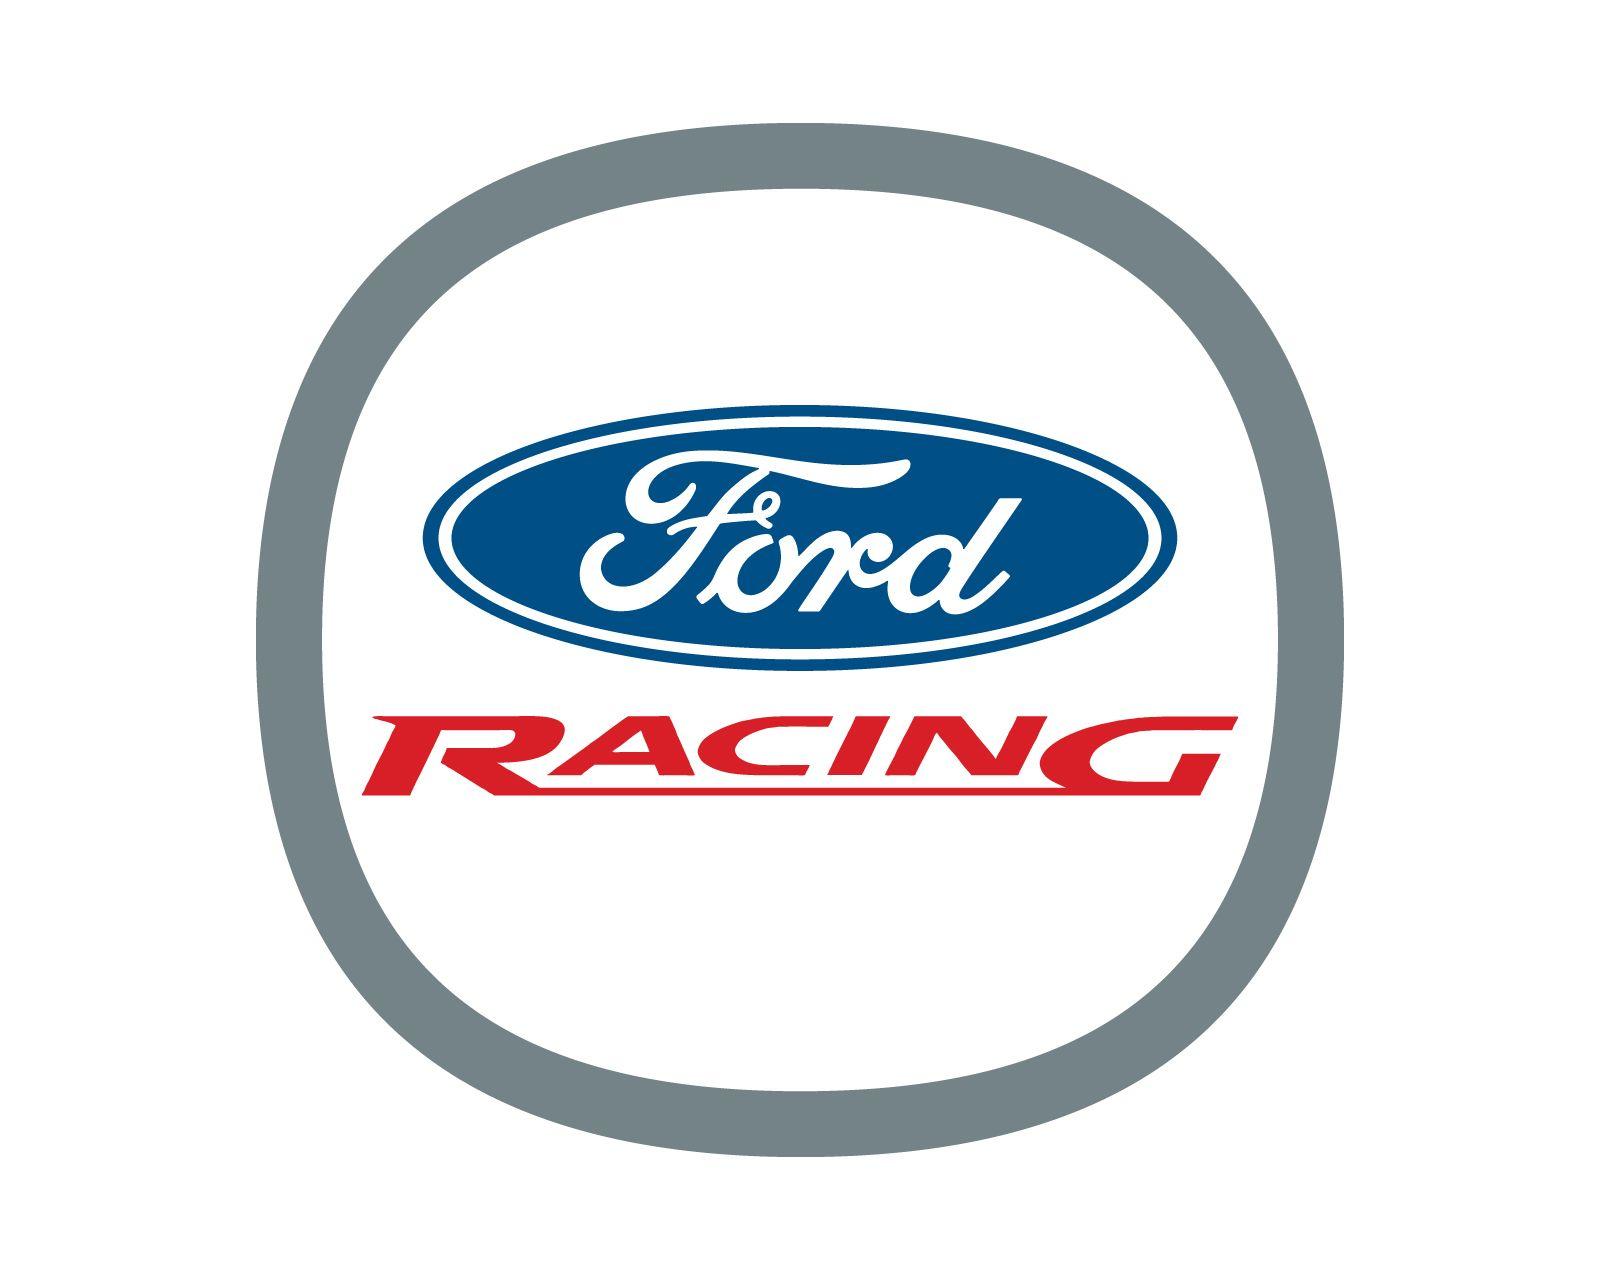 Cool Racing Logo - Cool Ford Racing Logos - image #46